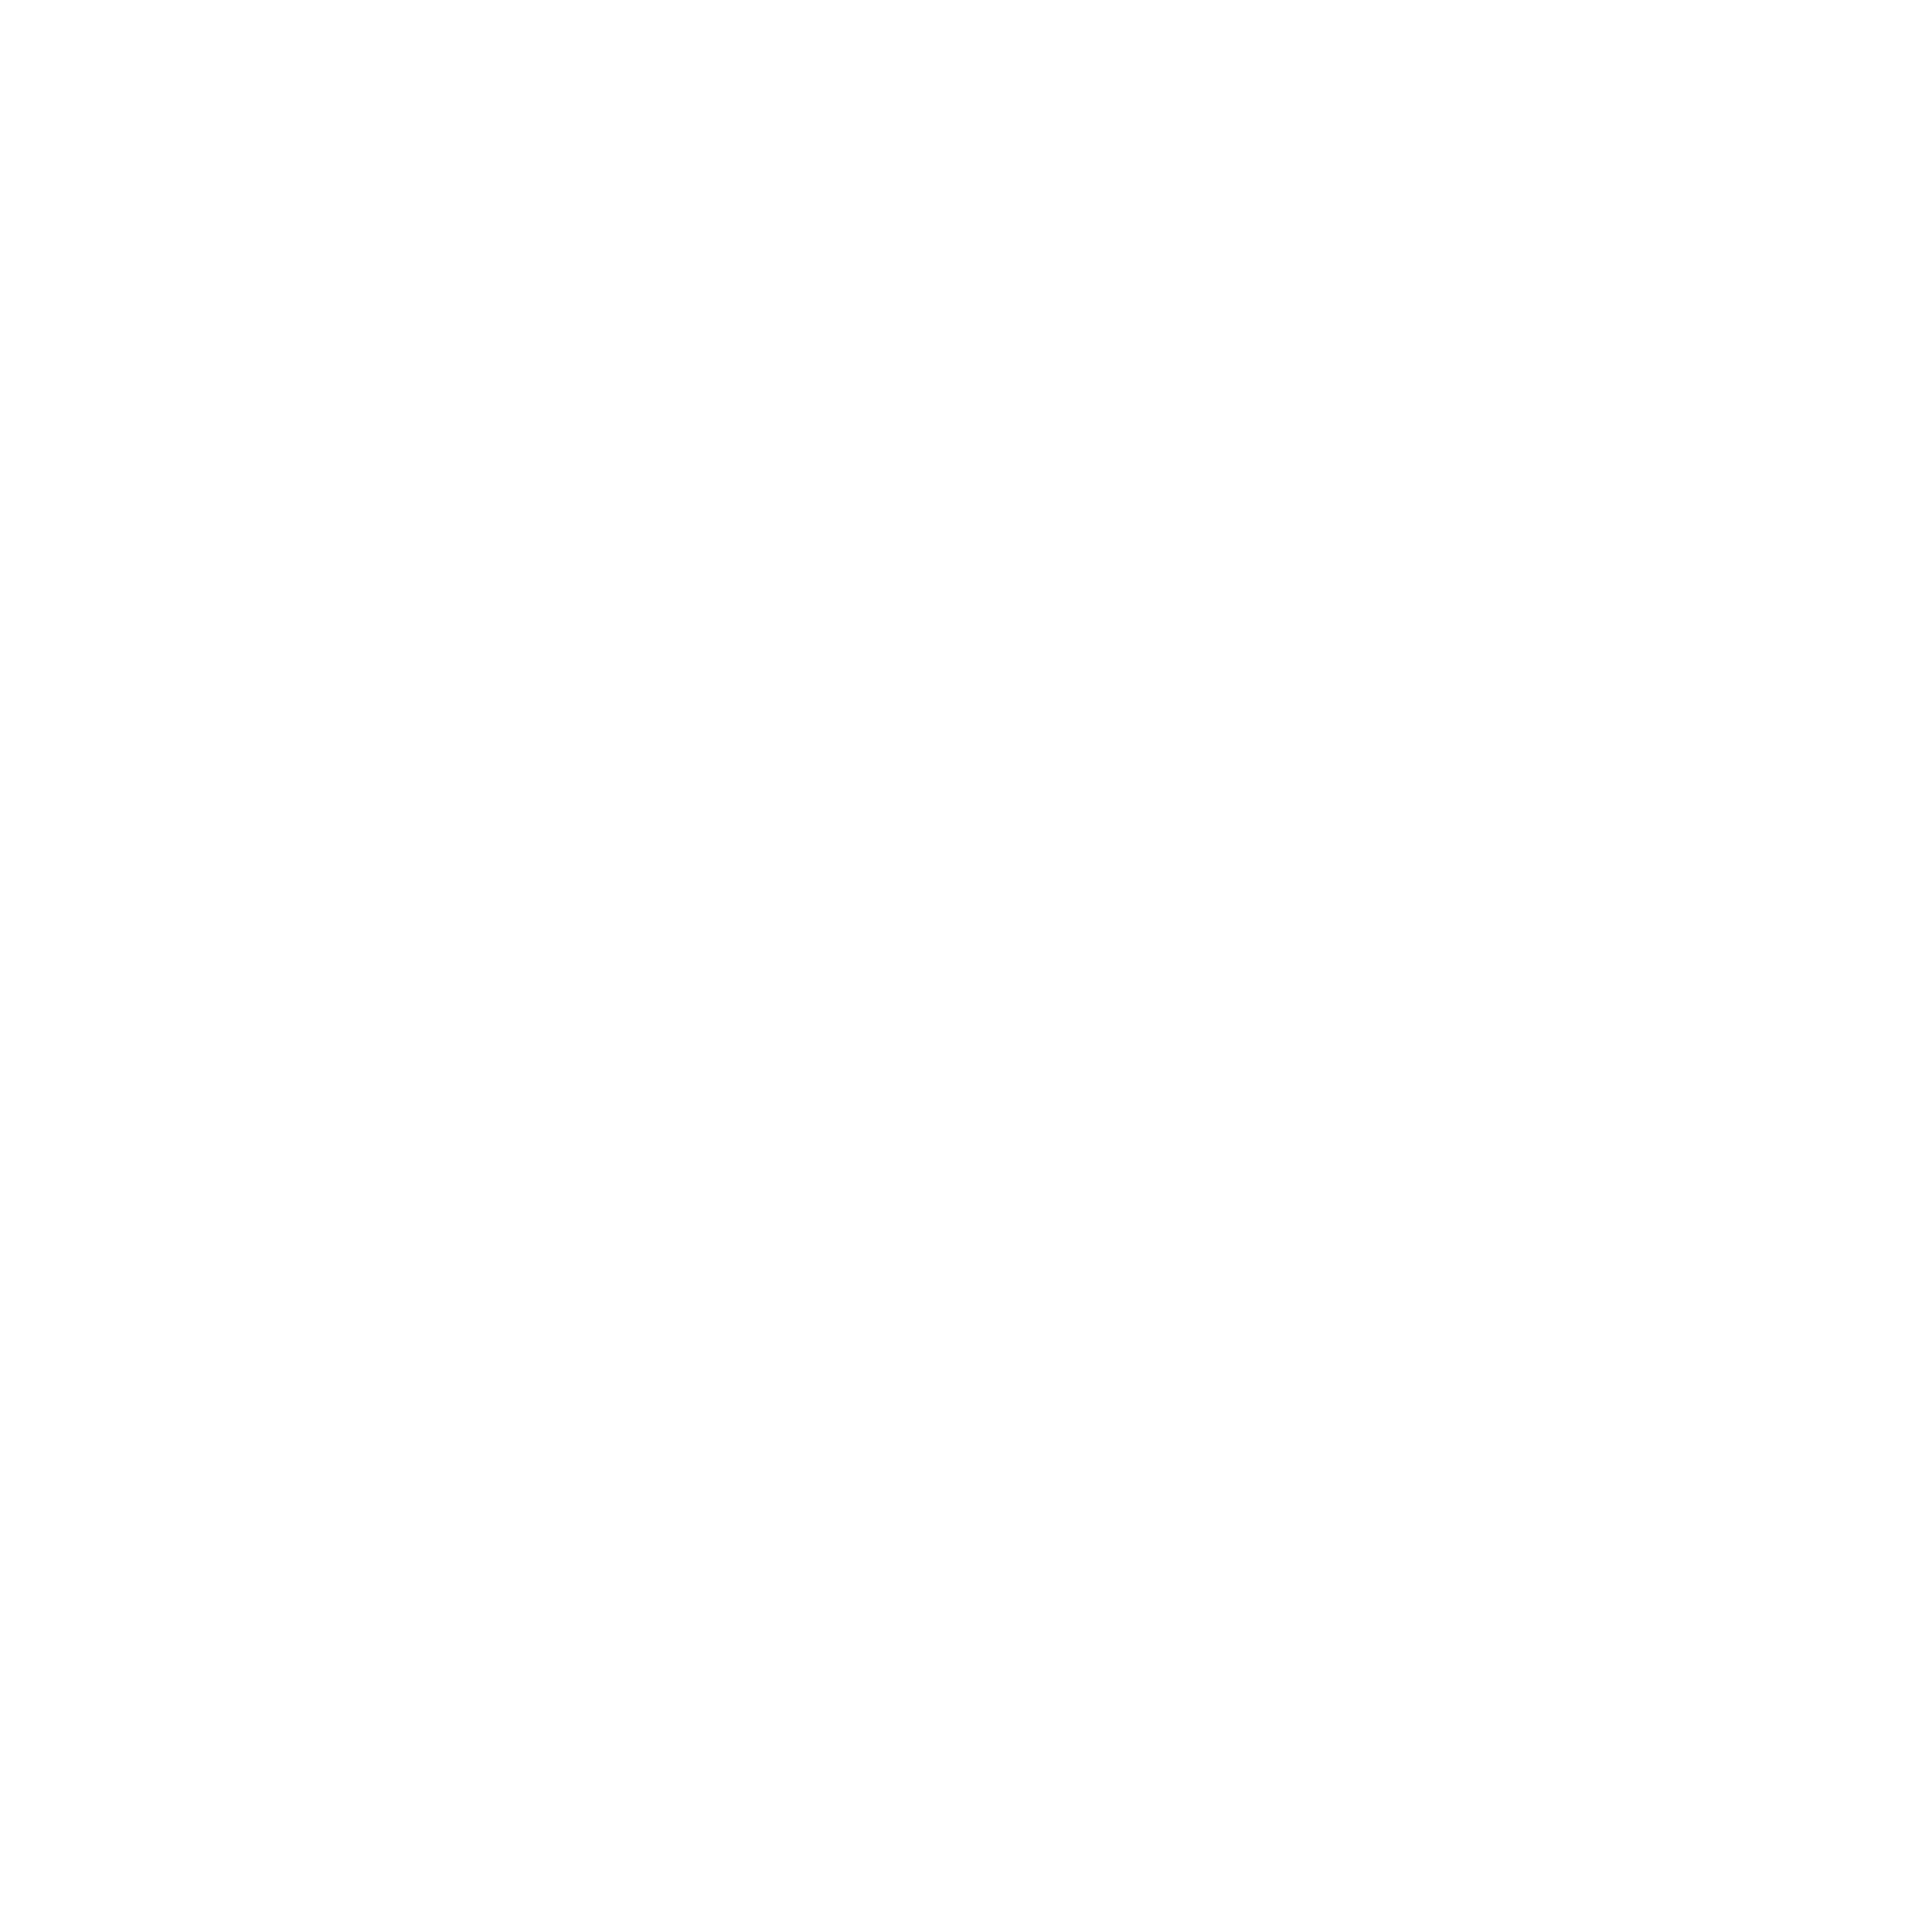 logo beefbar butcher shop